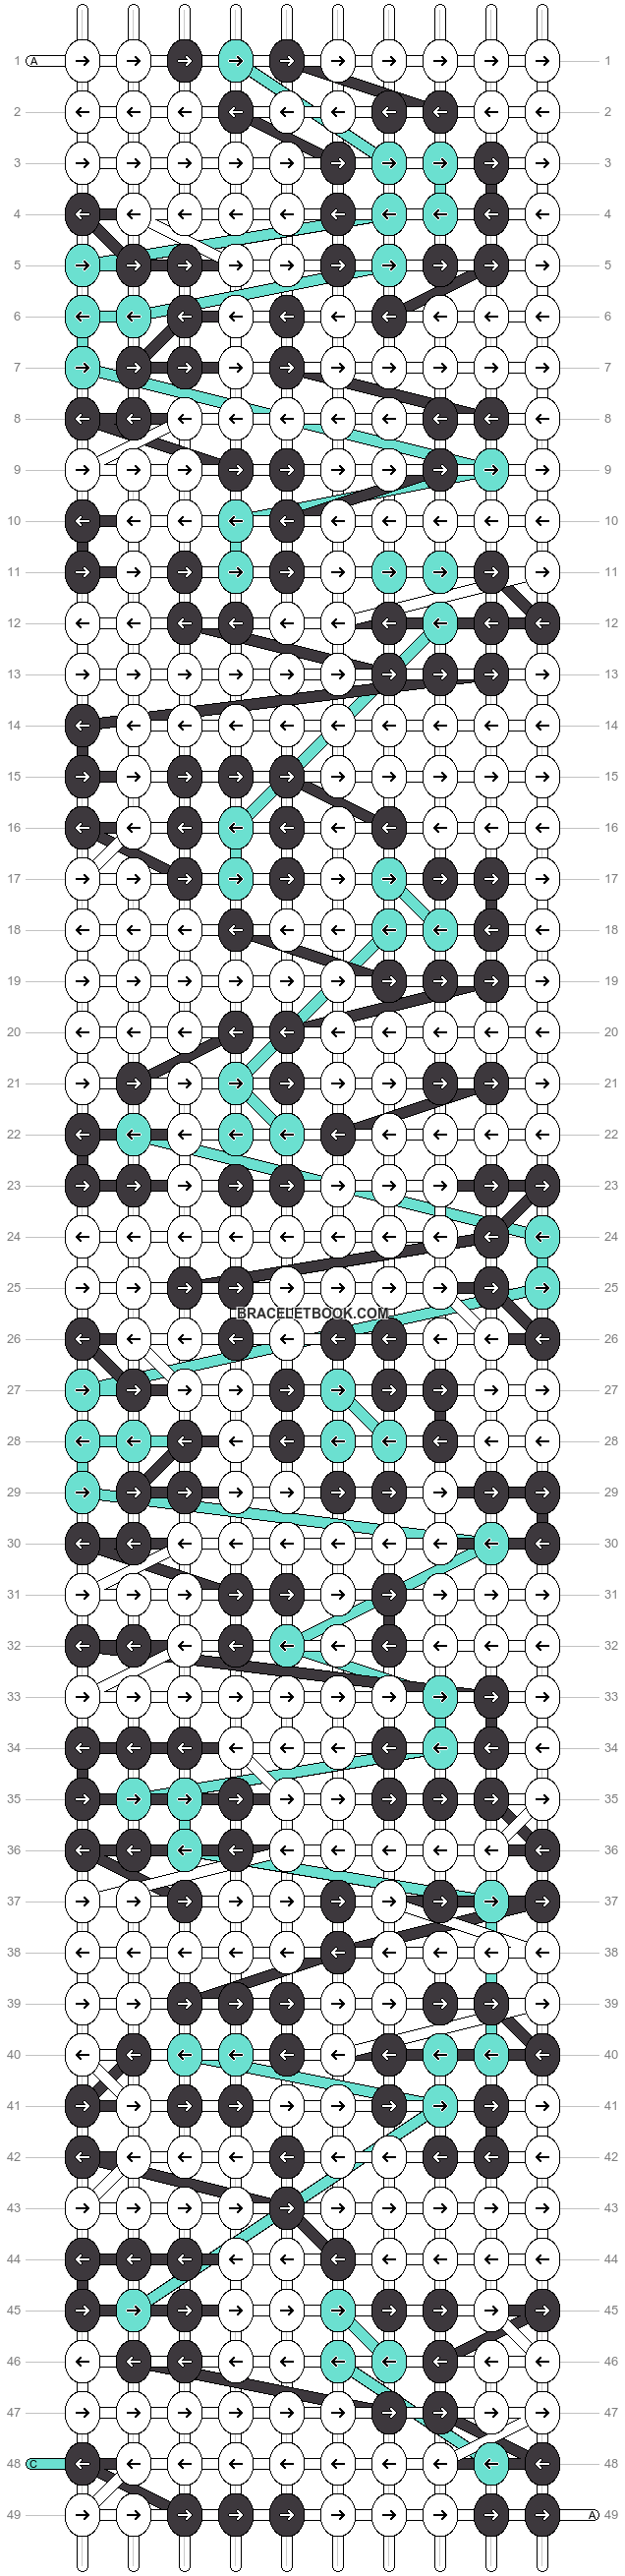 Alpha pattern #45272 variation #78565 pattern